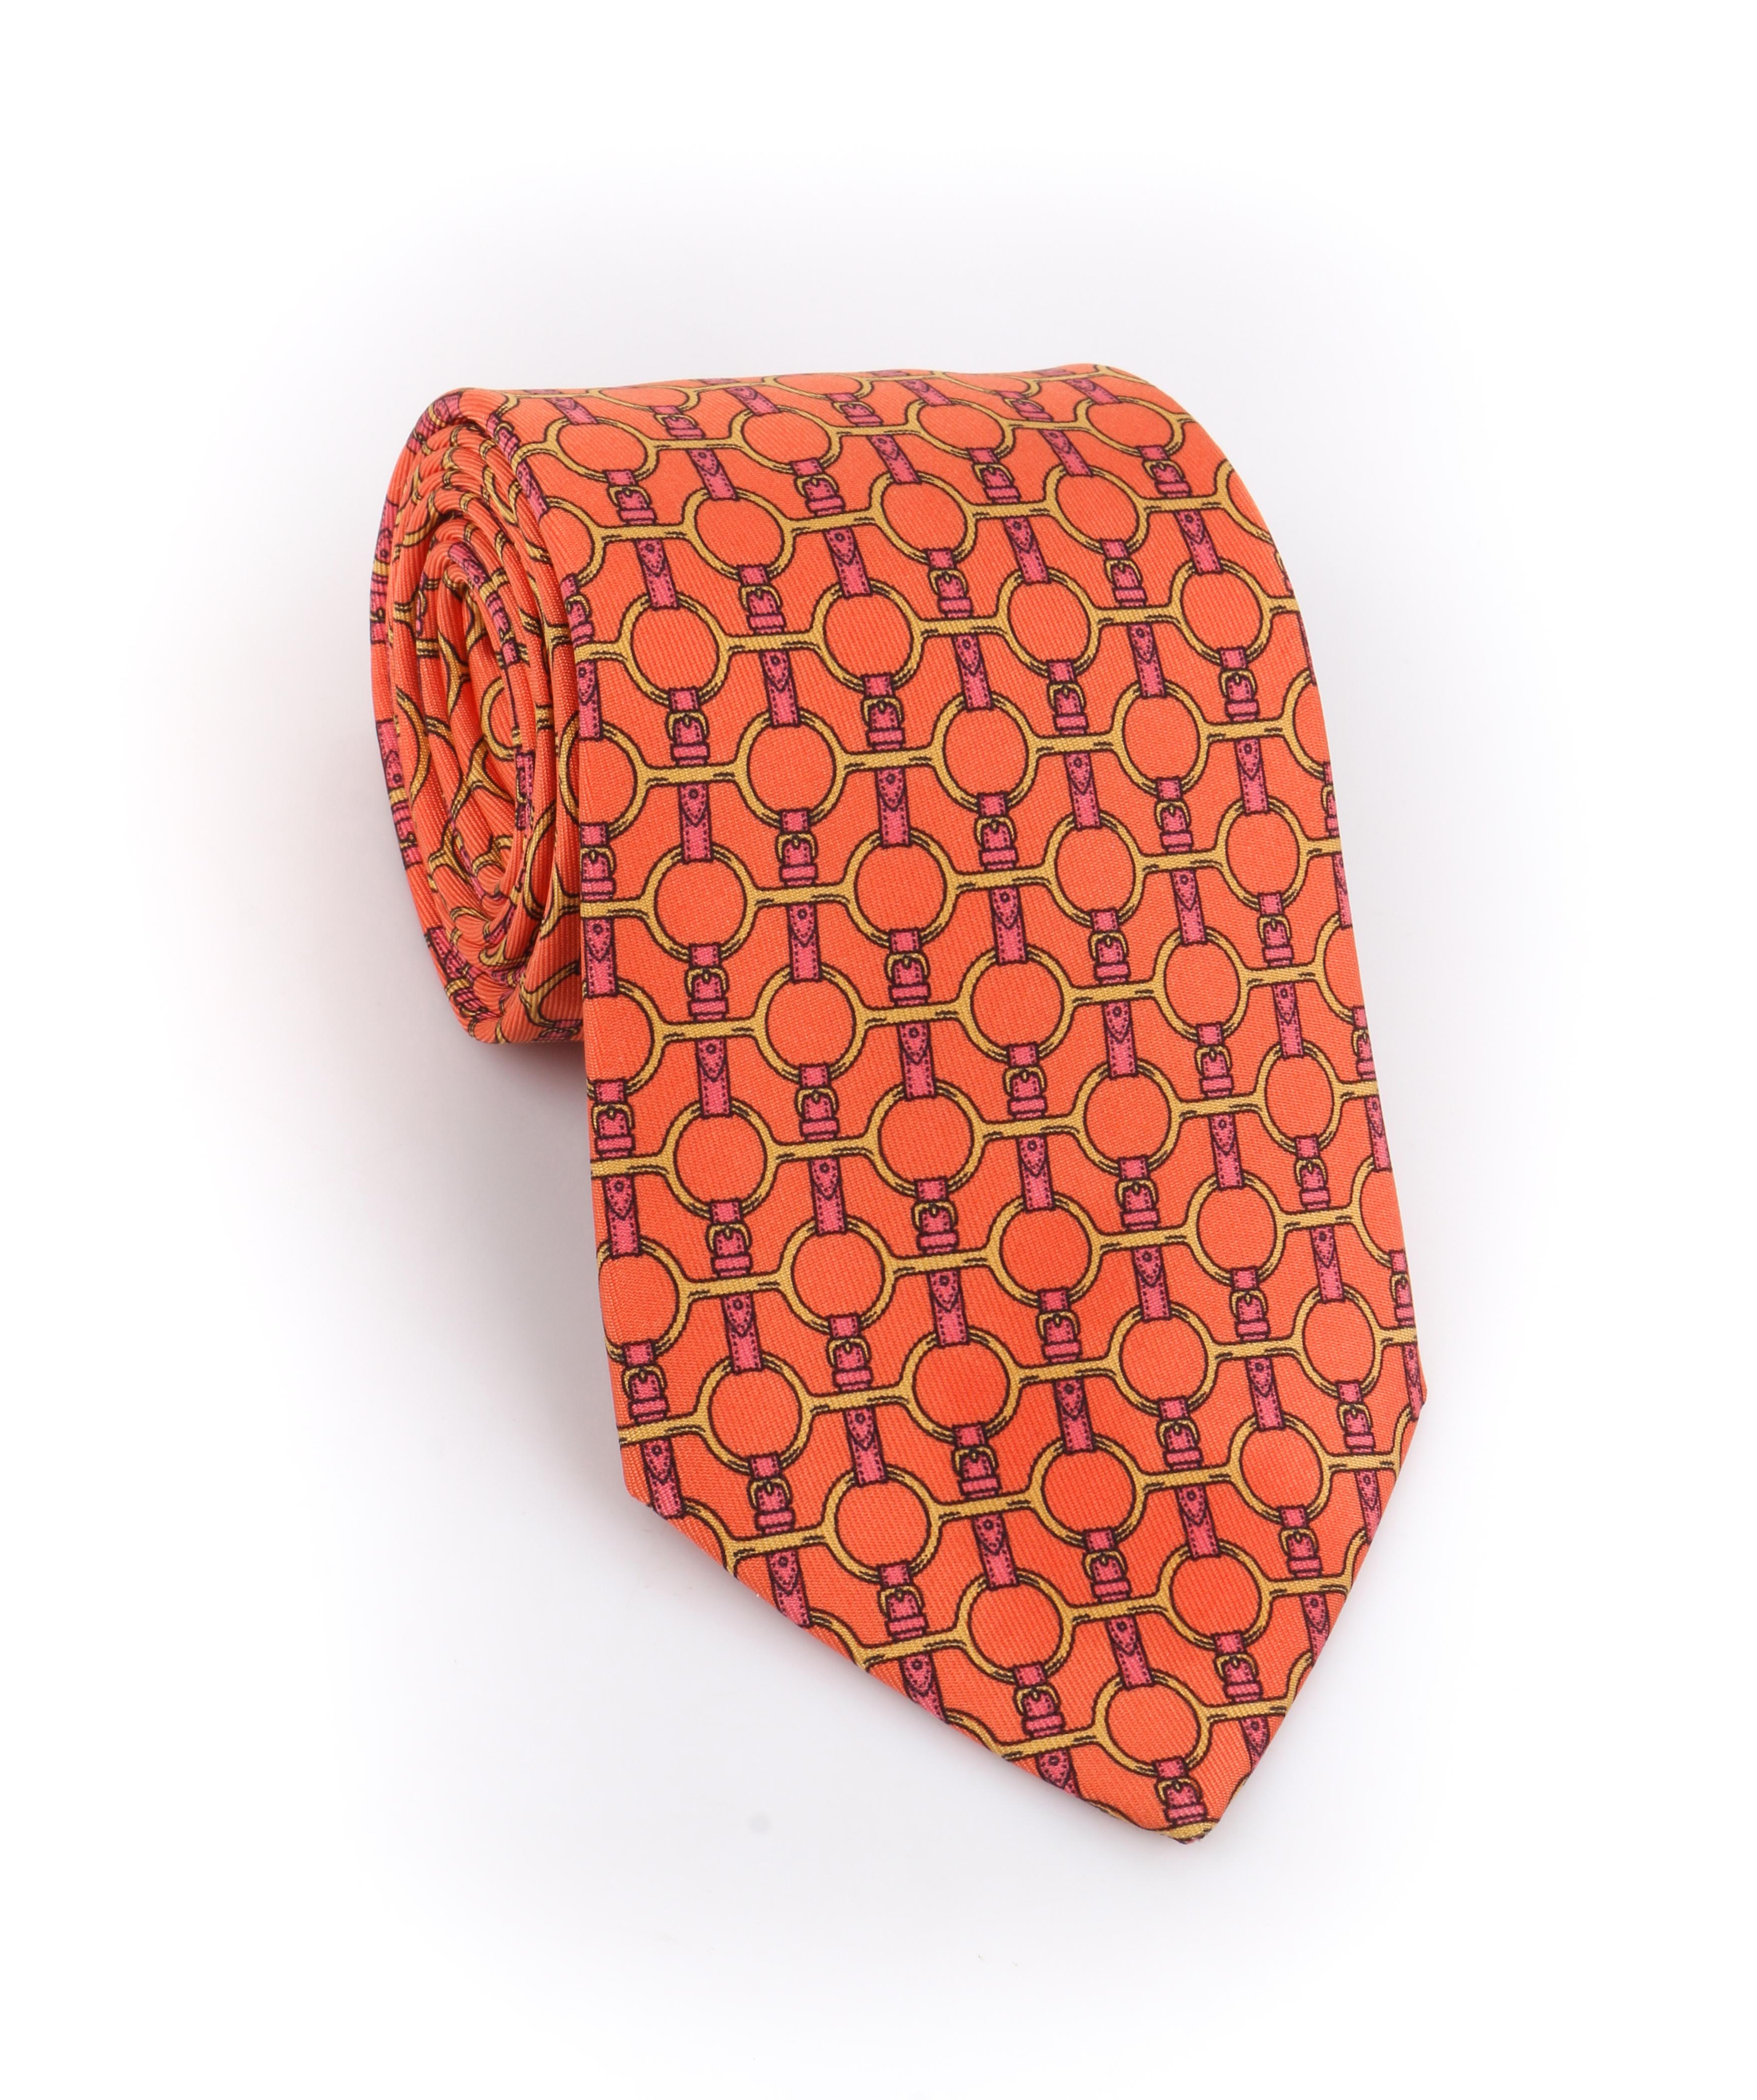 DESCRIPTION: HERMES Cadmium Orange Horsebit Belt Equestrian 5 Fold Silk Necktie Tie 627 TA
 
Brand / Manufacturer: Hermes
Collection: 
Designer: 
Manufacturer Style Name: 
Style: 5 fold necktie
Color(s): 
Lined: Yes
Marked Fabric Content: 100%